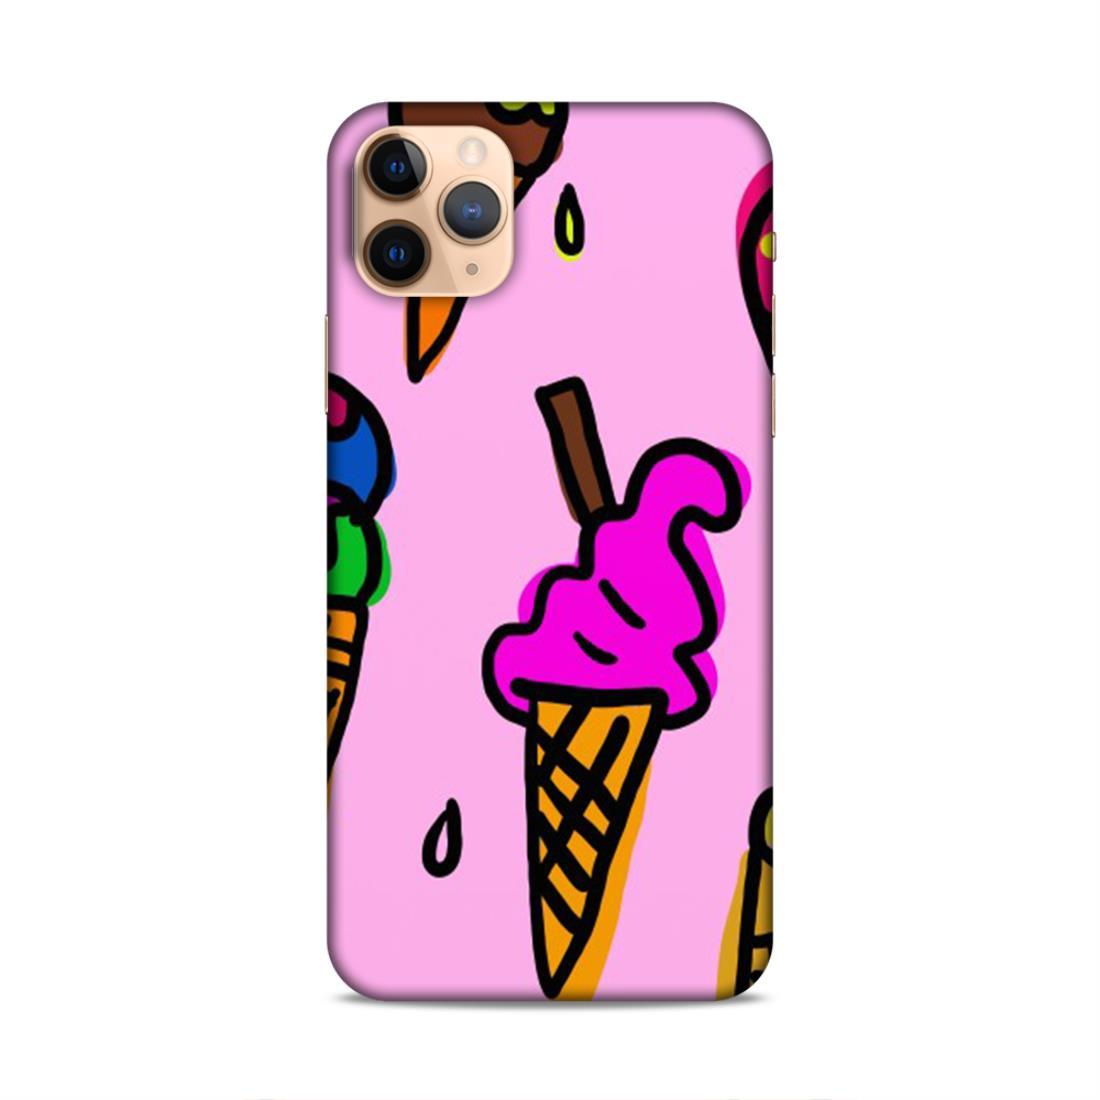 Icecream Pink iPhone 11 Pro Phone Cover